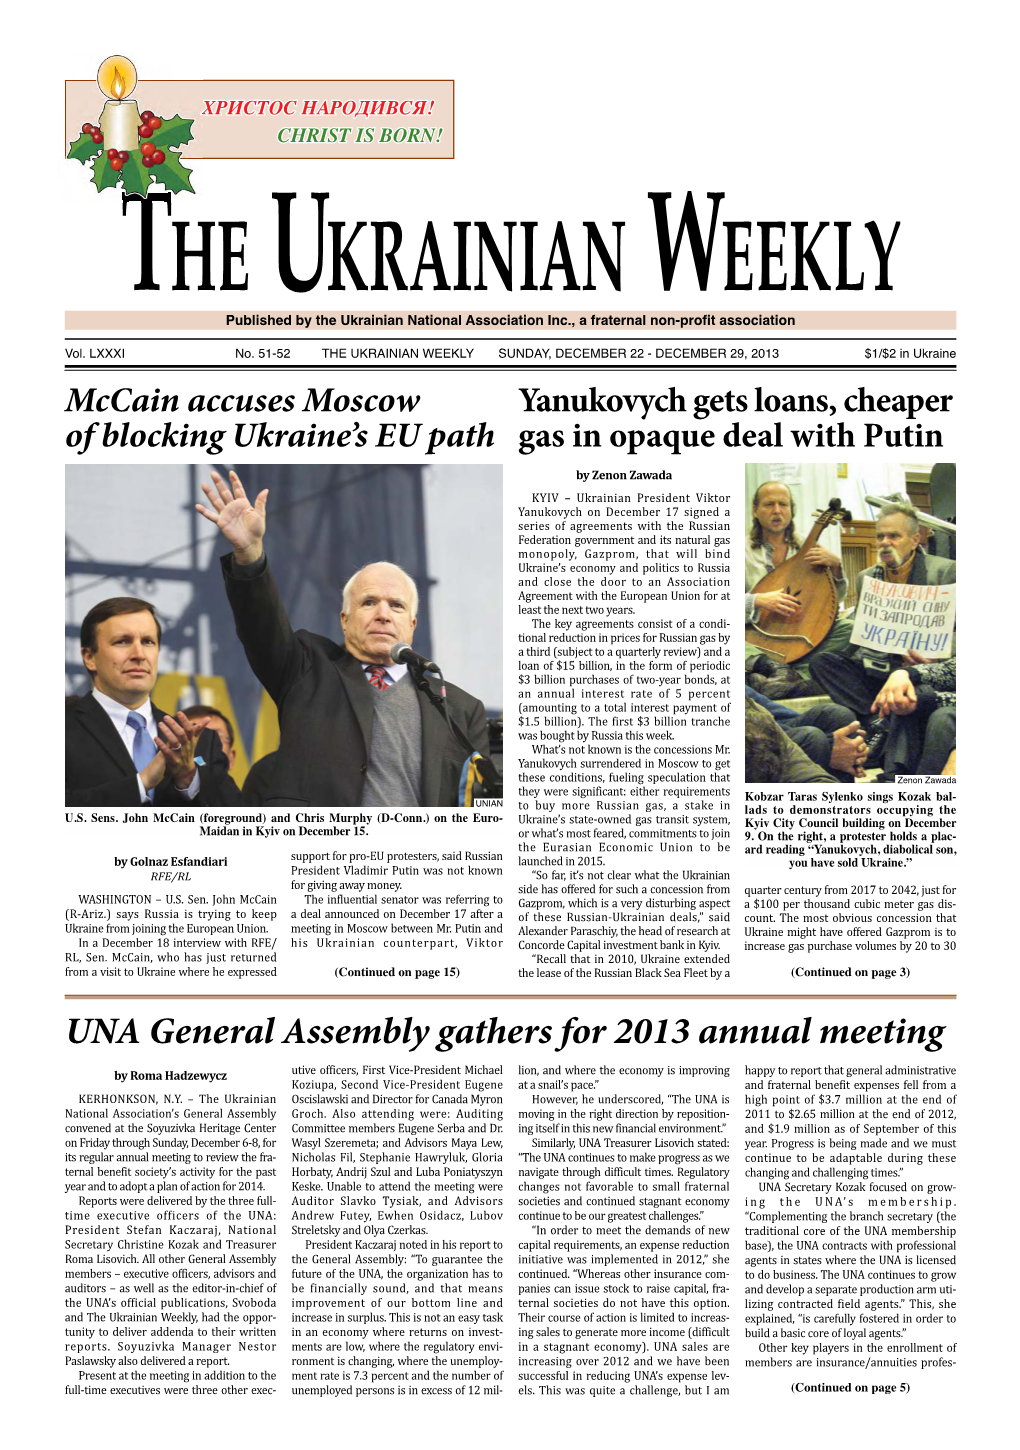 The Ukrainian Weekly 2013, No.51-52